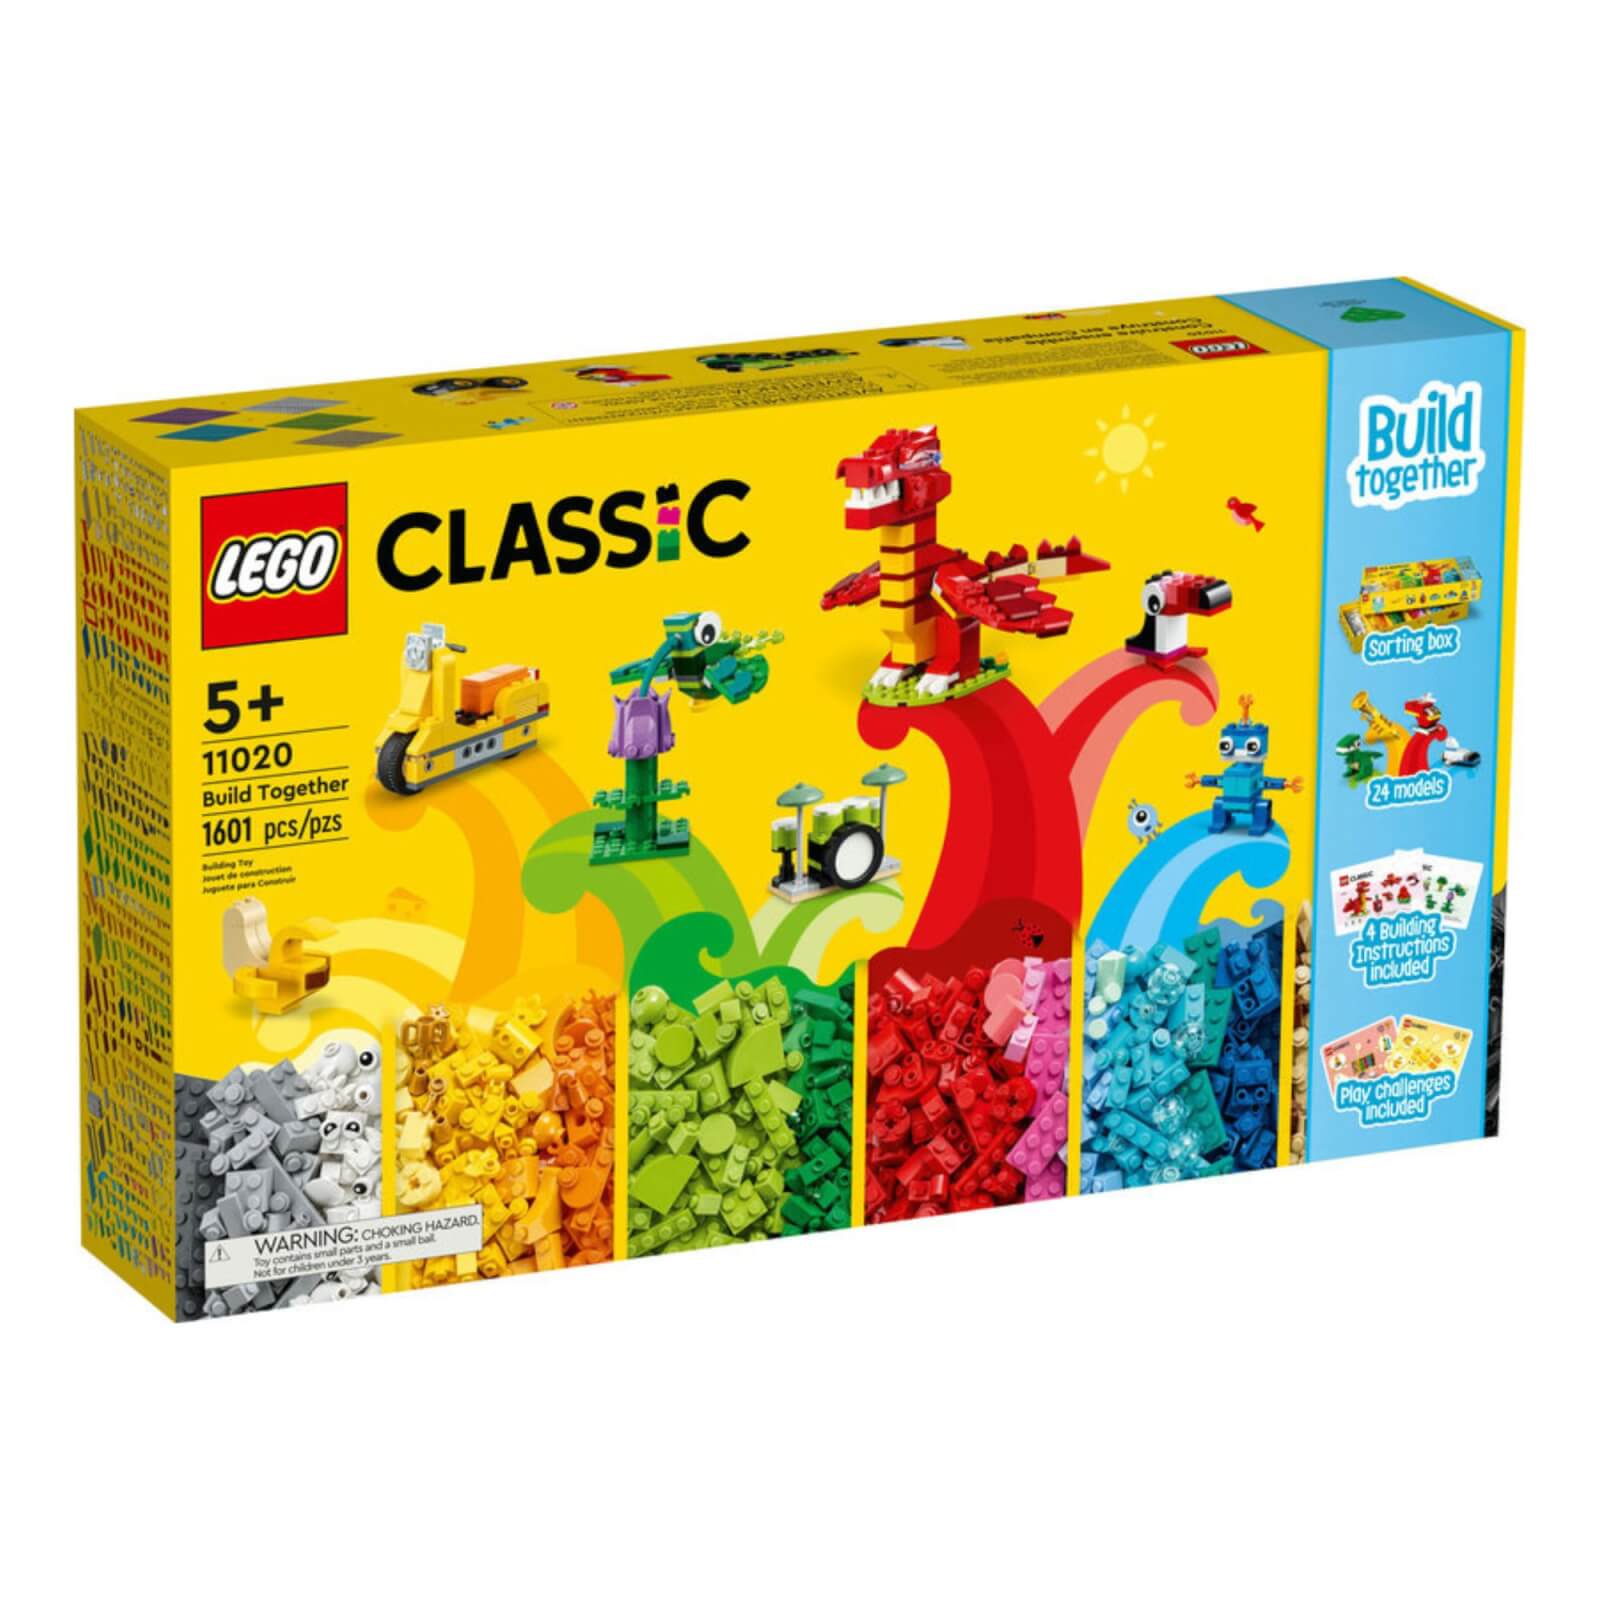 LEGO Classic: Build Together Bricks & Base Plates Set (11020)